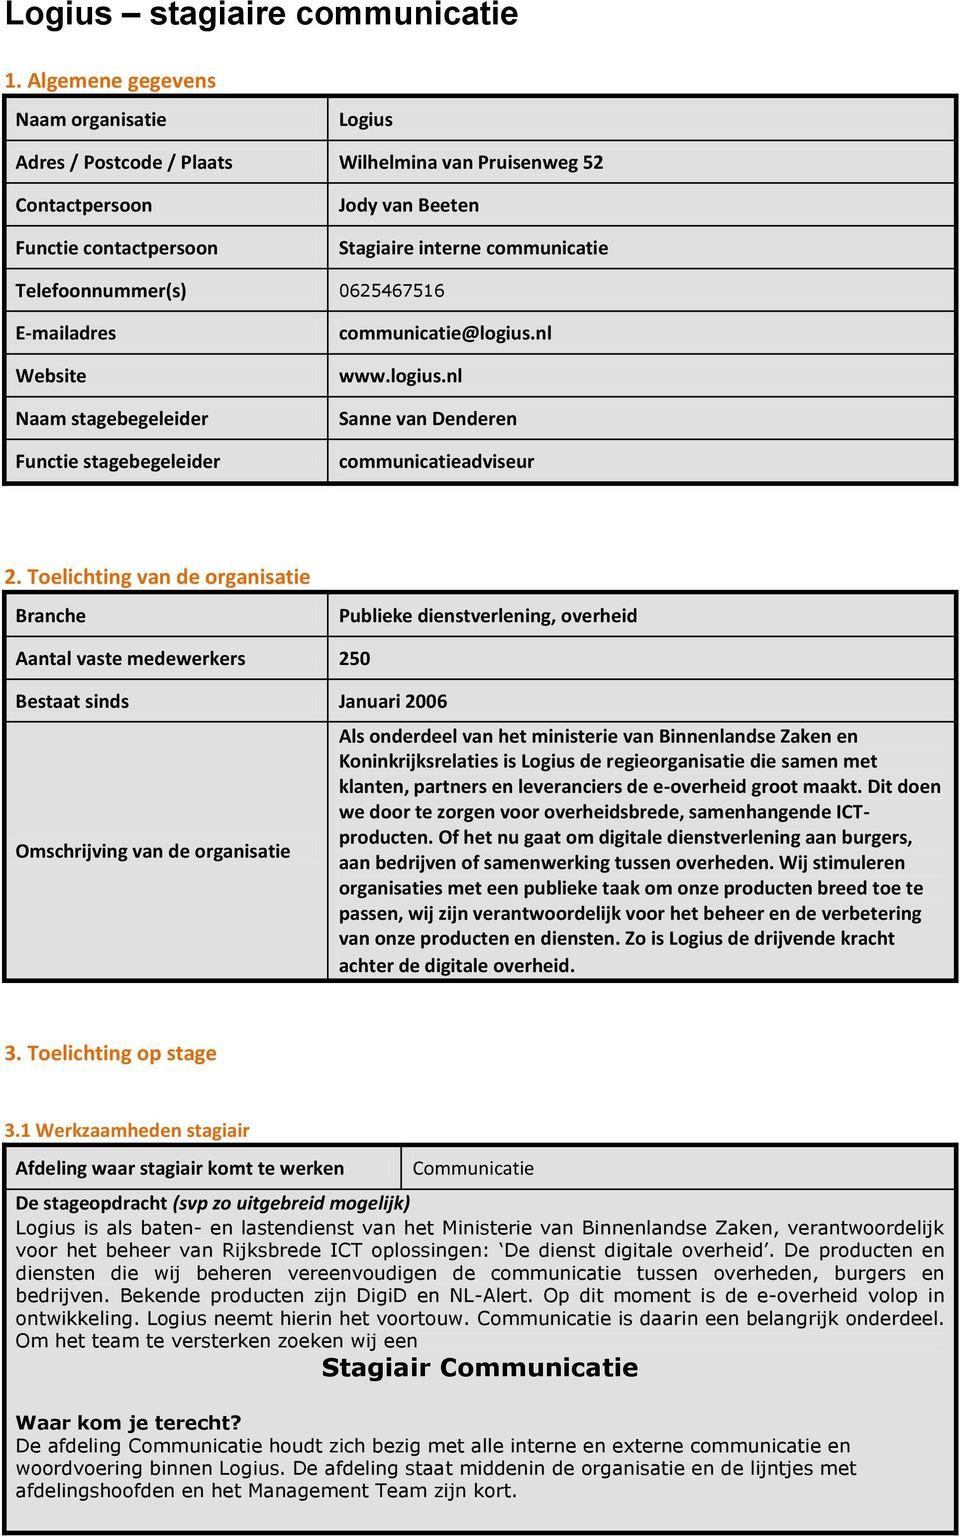 0625467516 E-mailadres Website Naam stagebegeleider Functie stagebegeleider communicatie@logius.nl www.logius.nl Sanne van Denderen communicatieadviseur 2.